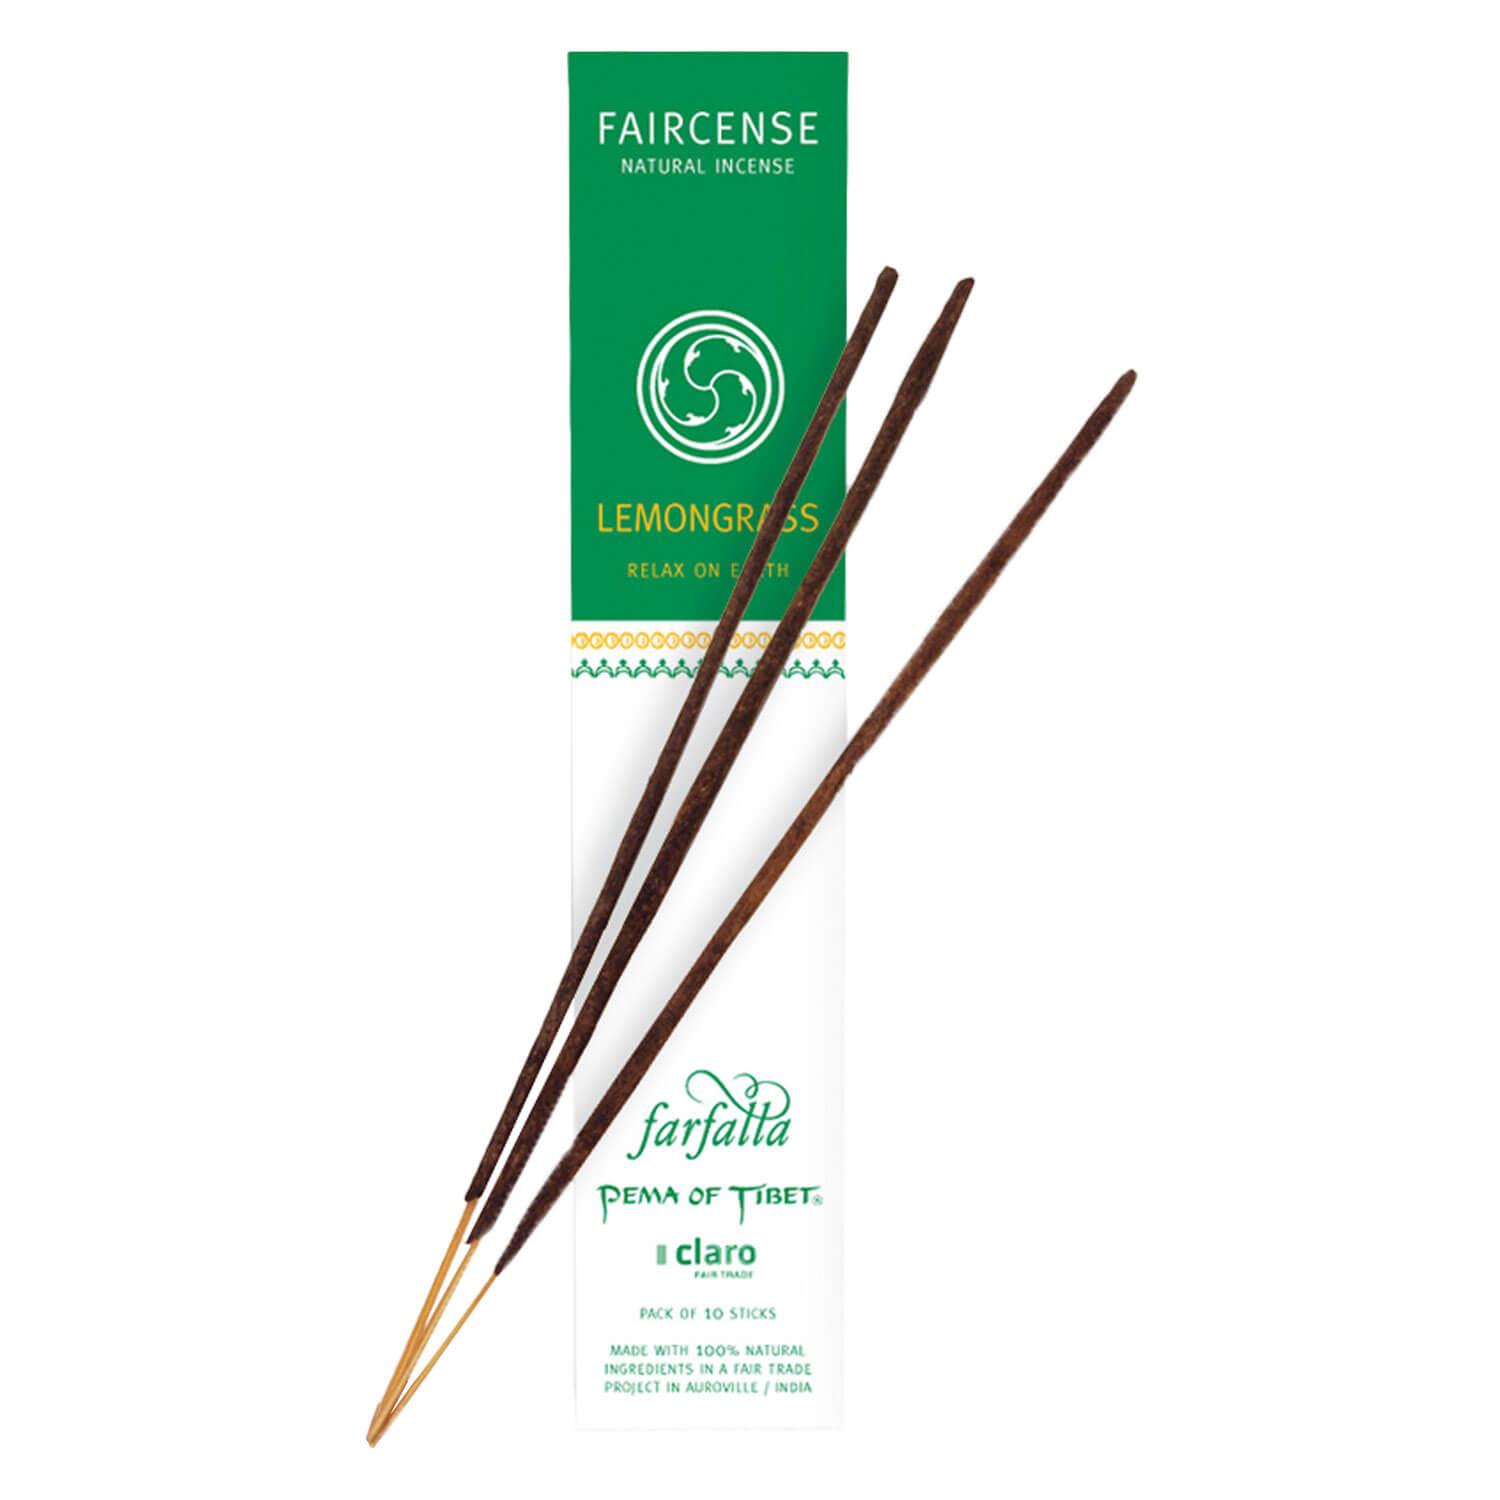 Farfalla Räucherstäbchen - Lemongrass/Relax on Earth - Faircense Incense Sticks